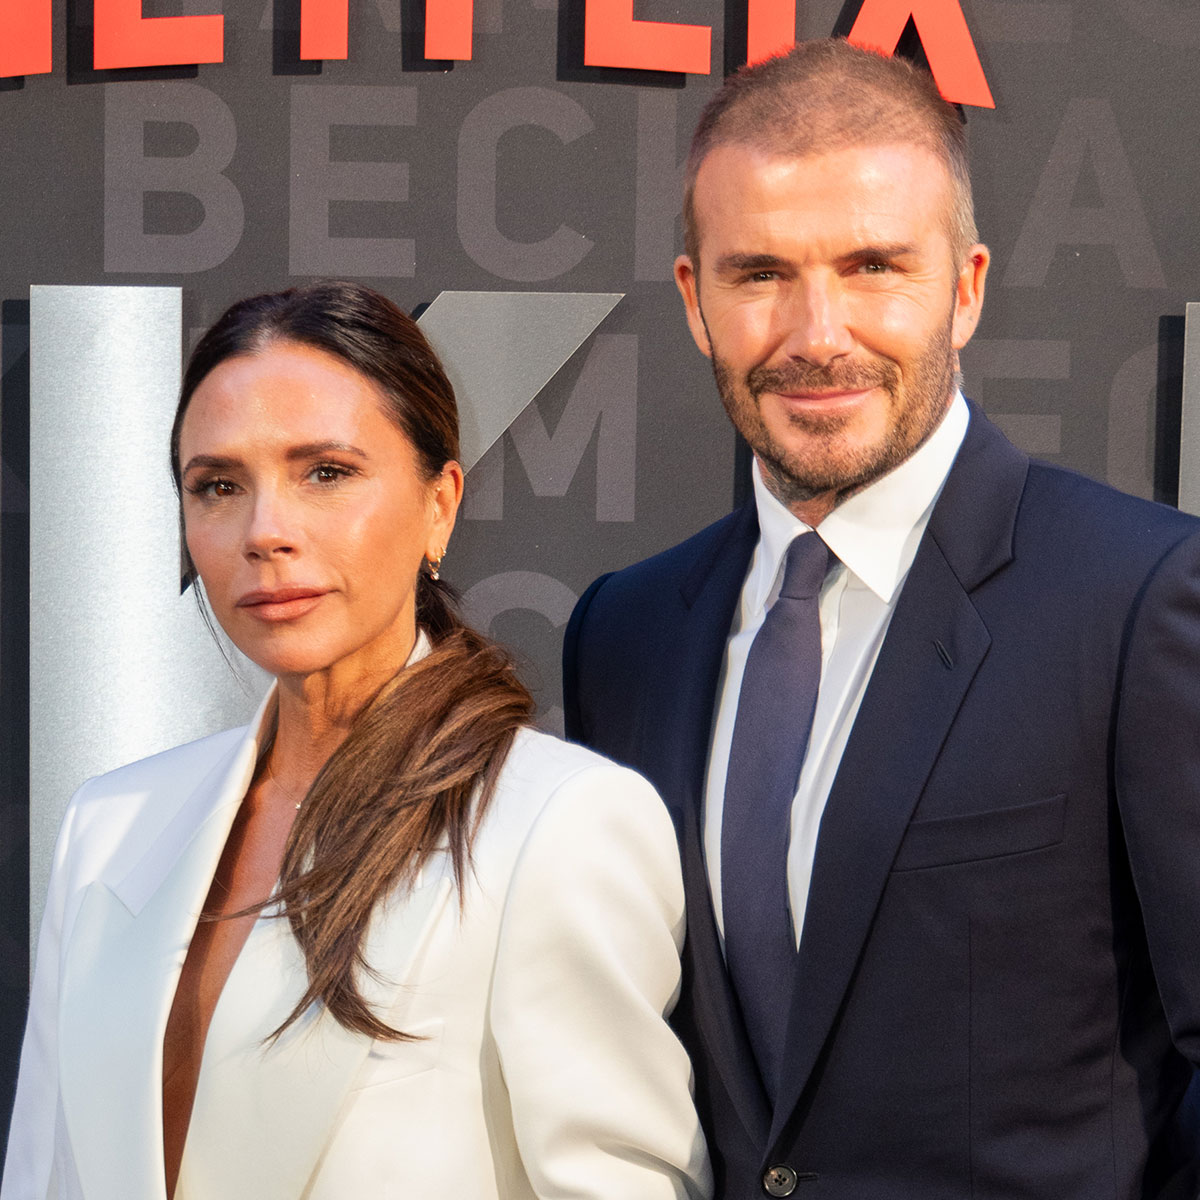 New David Beckham Netflix Docuseries Addresses Whether The Soccer